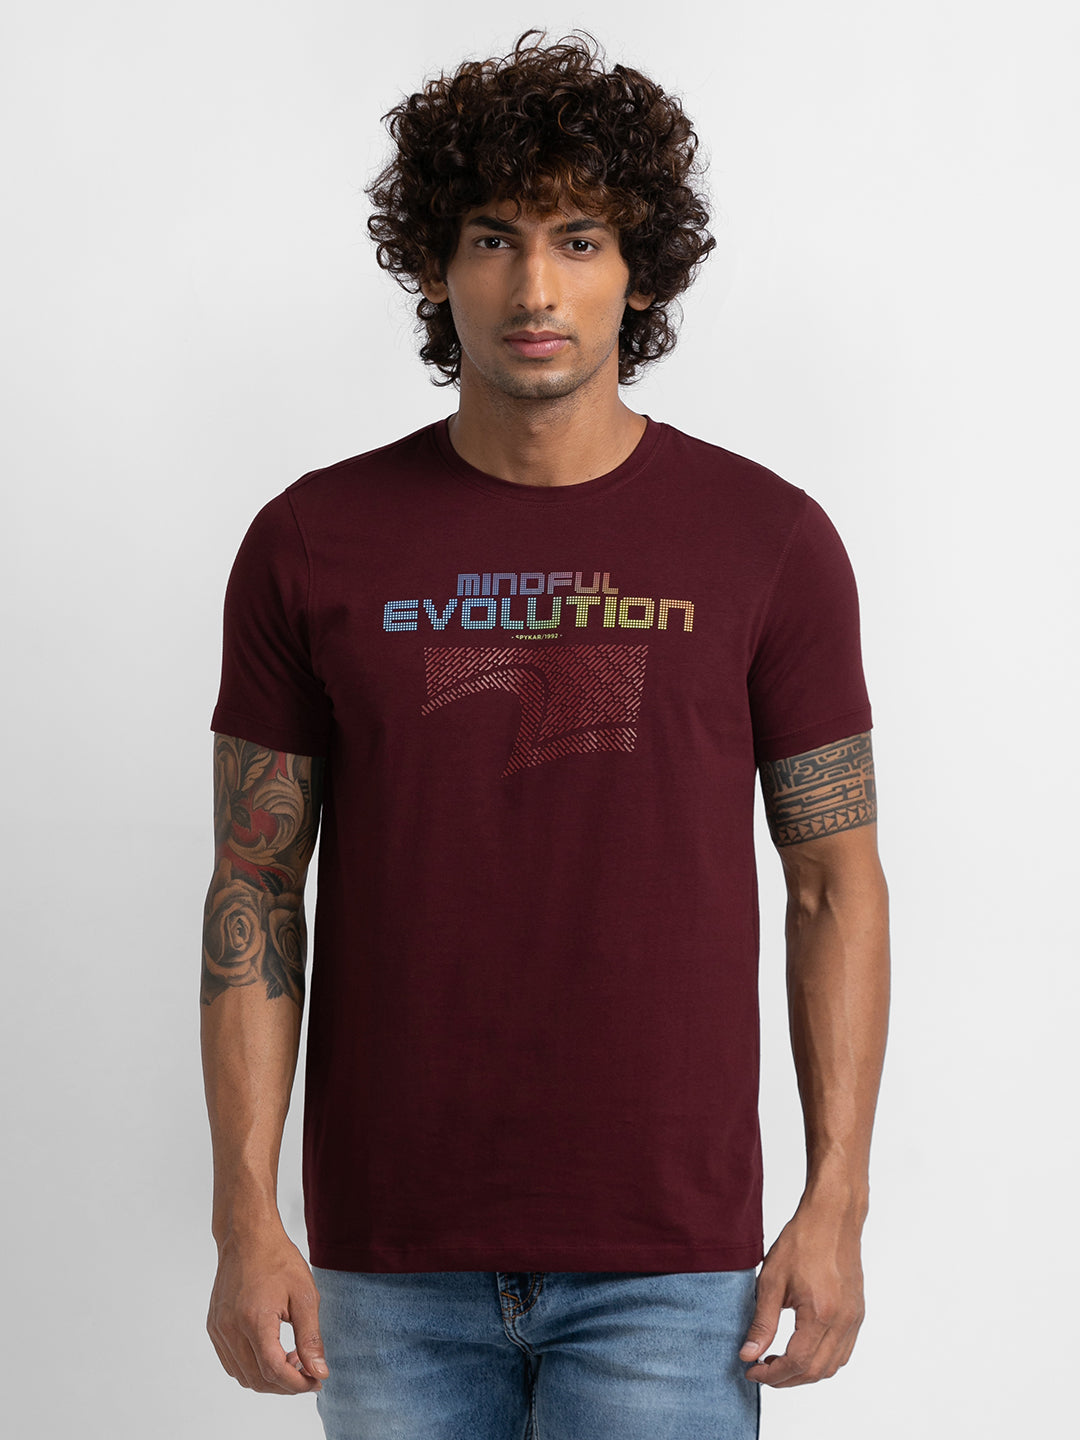 Spykar Wine Cotton Half Sleeve Printed Casual T-Shirt For Men